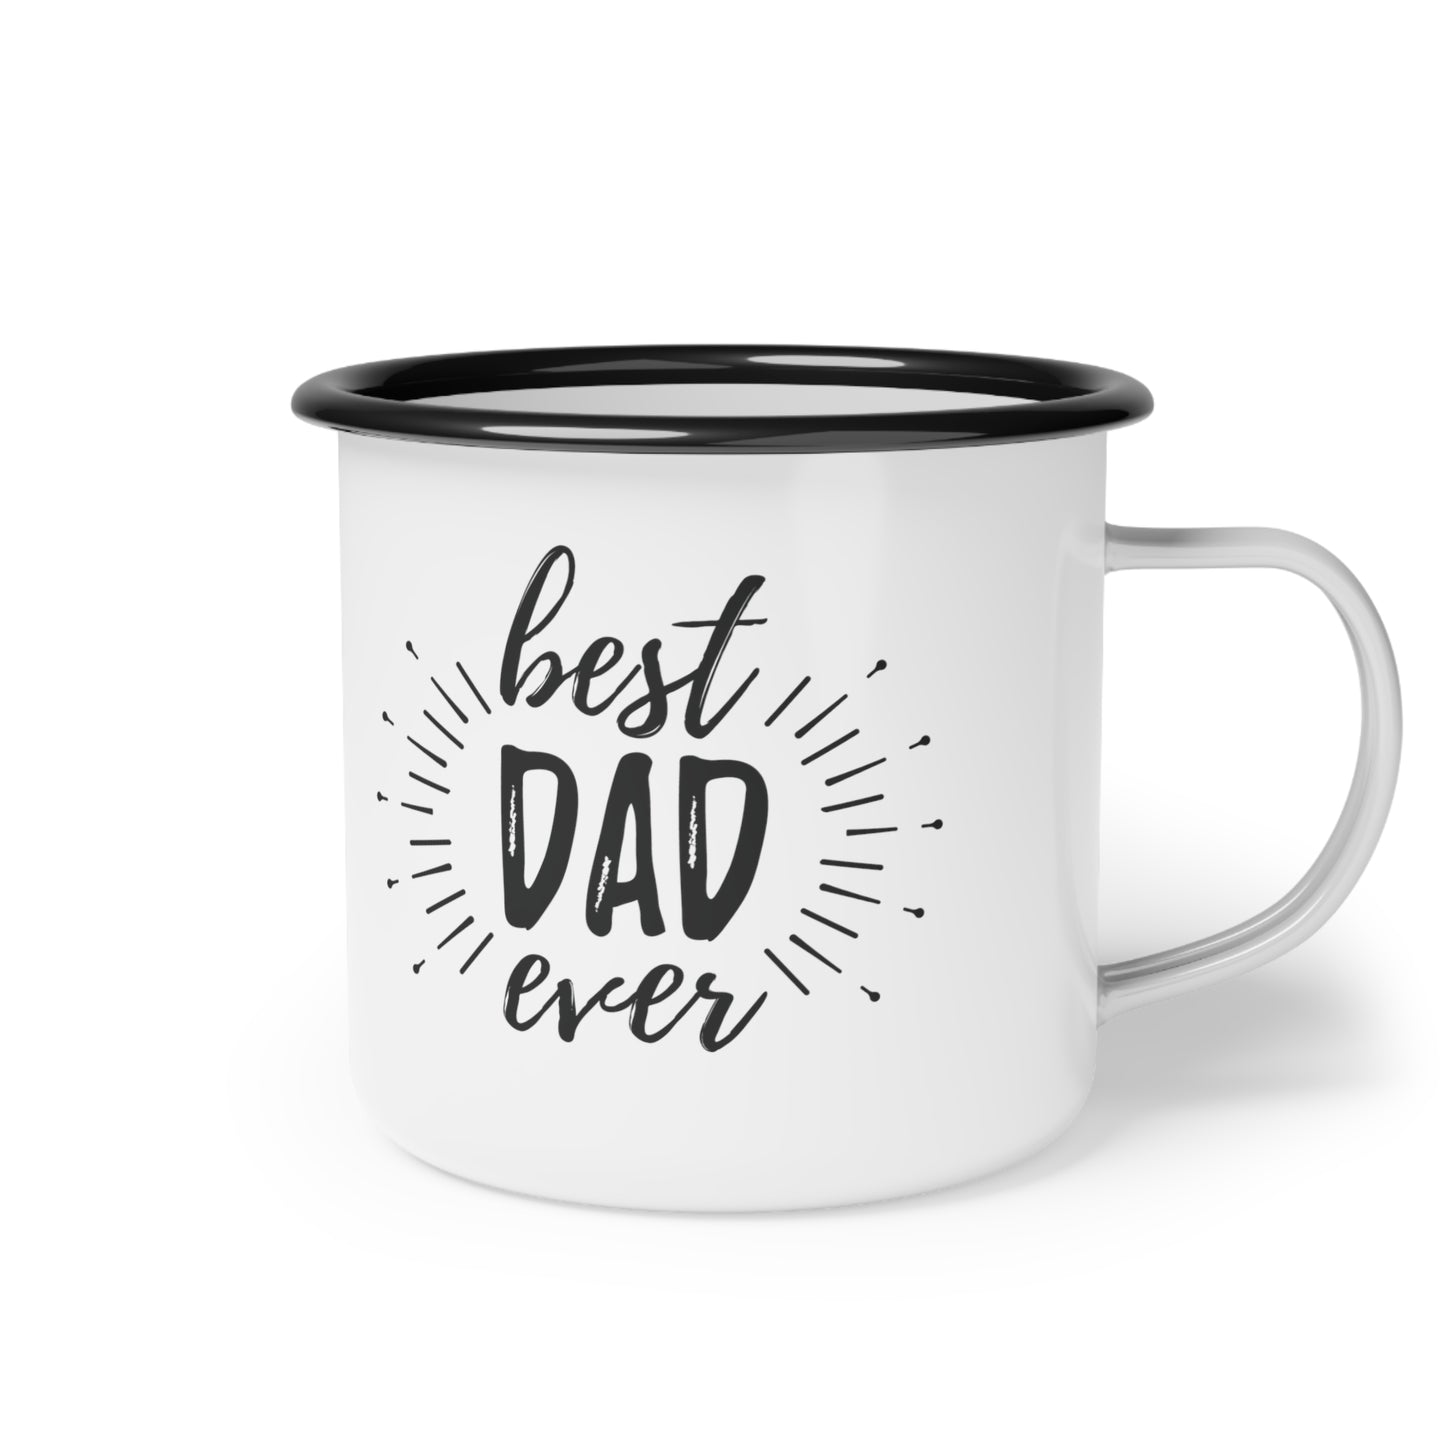 Enamel Camp Cup - Best dad ever